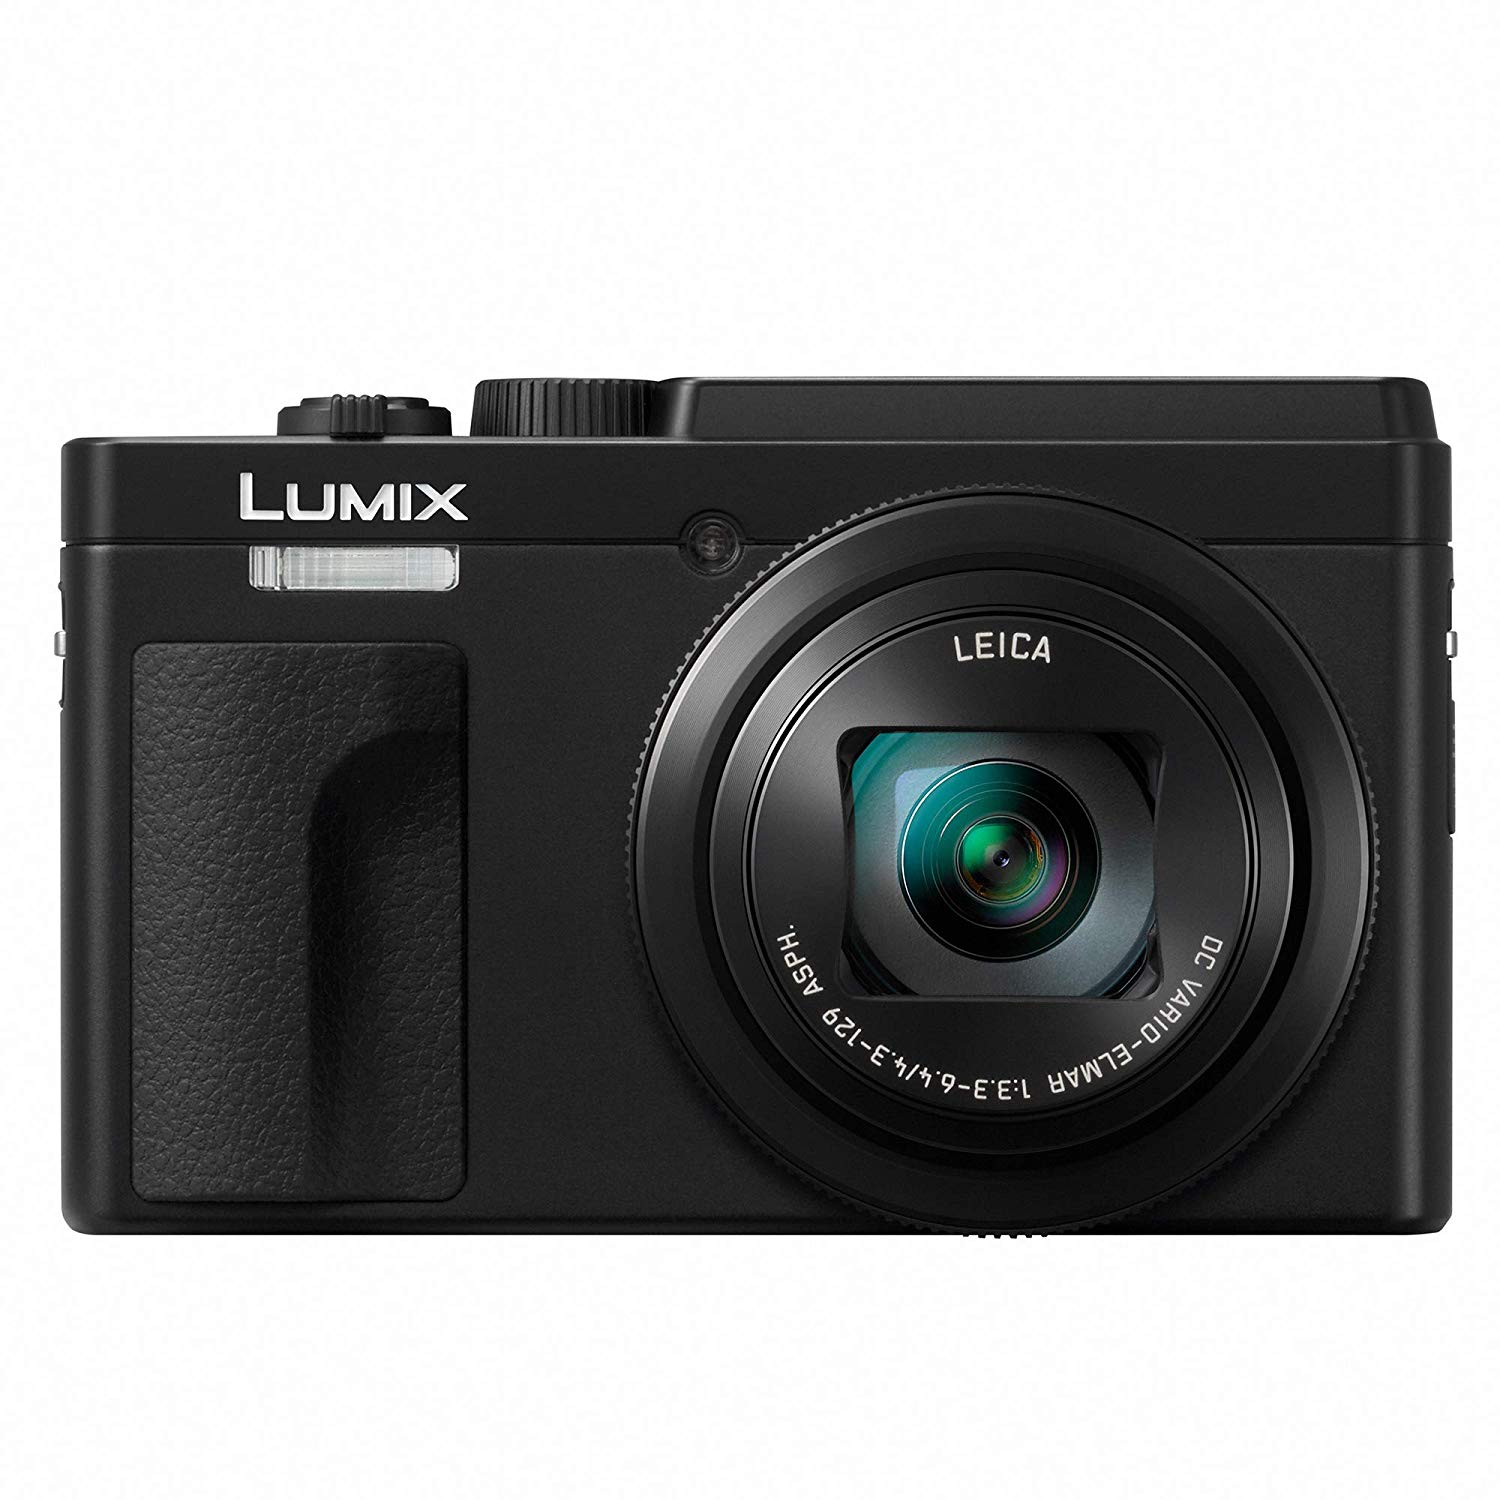 Panasonic كاميرا رقمية من باناسونيك لوميكس DC-ZS80 - أسود